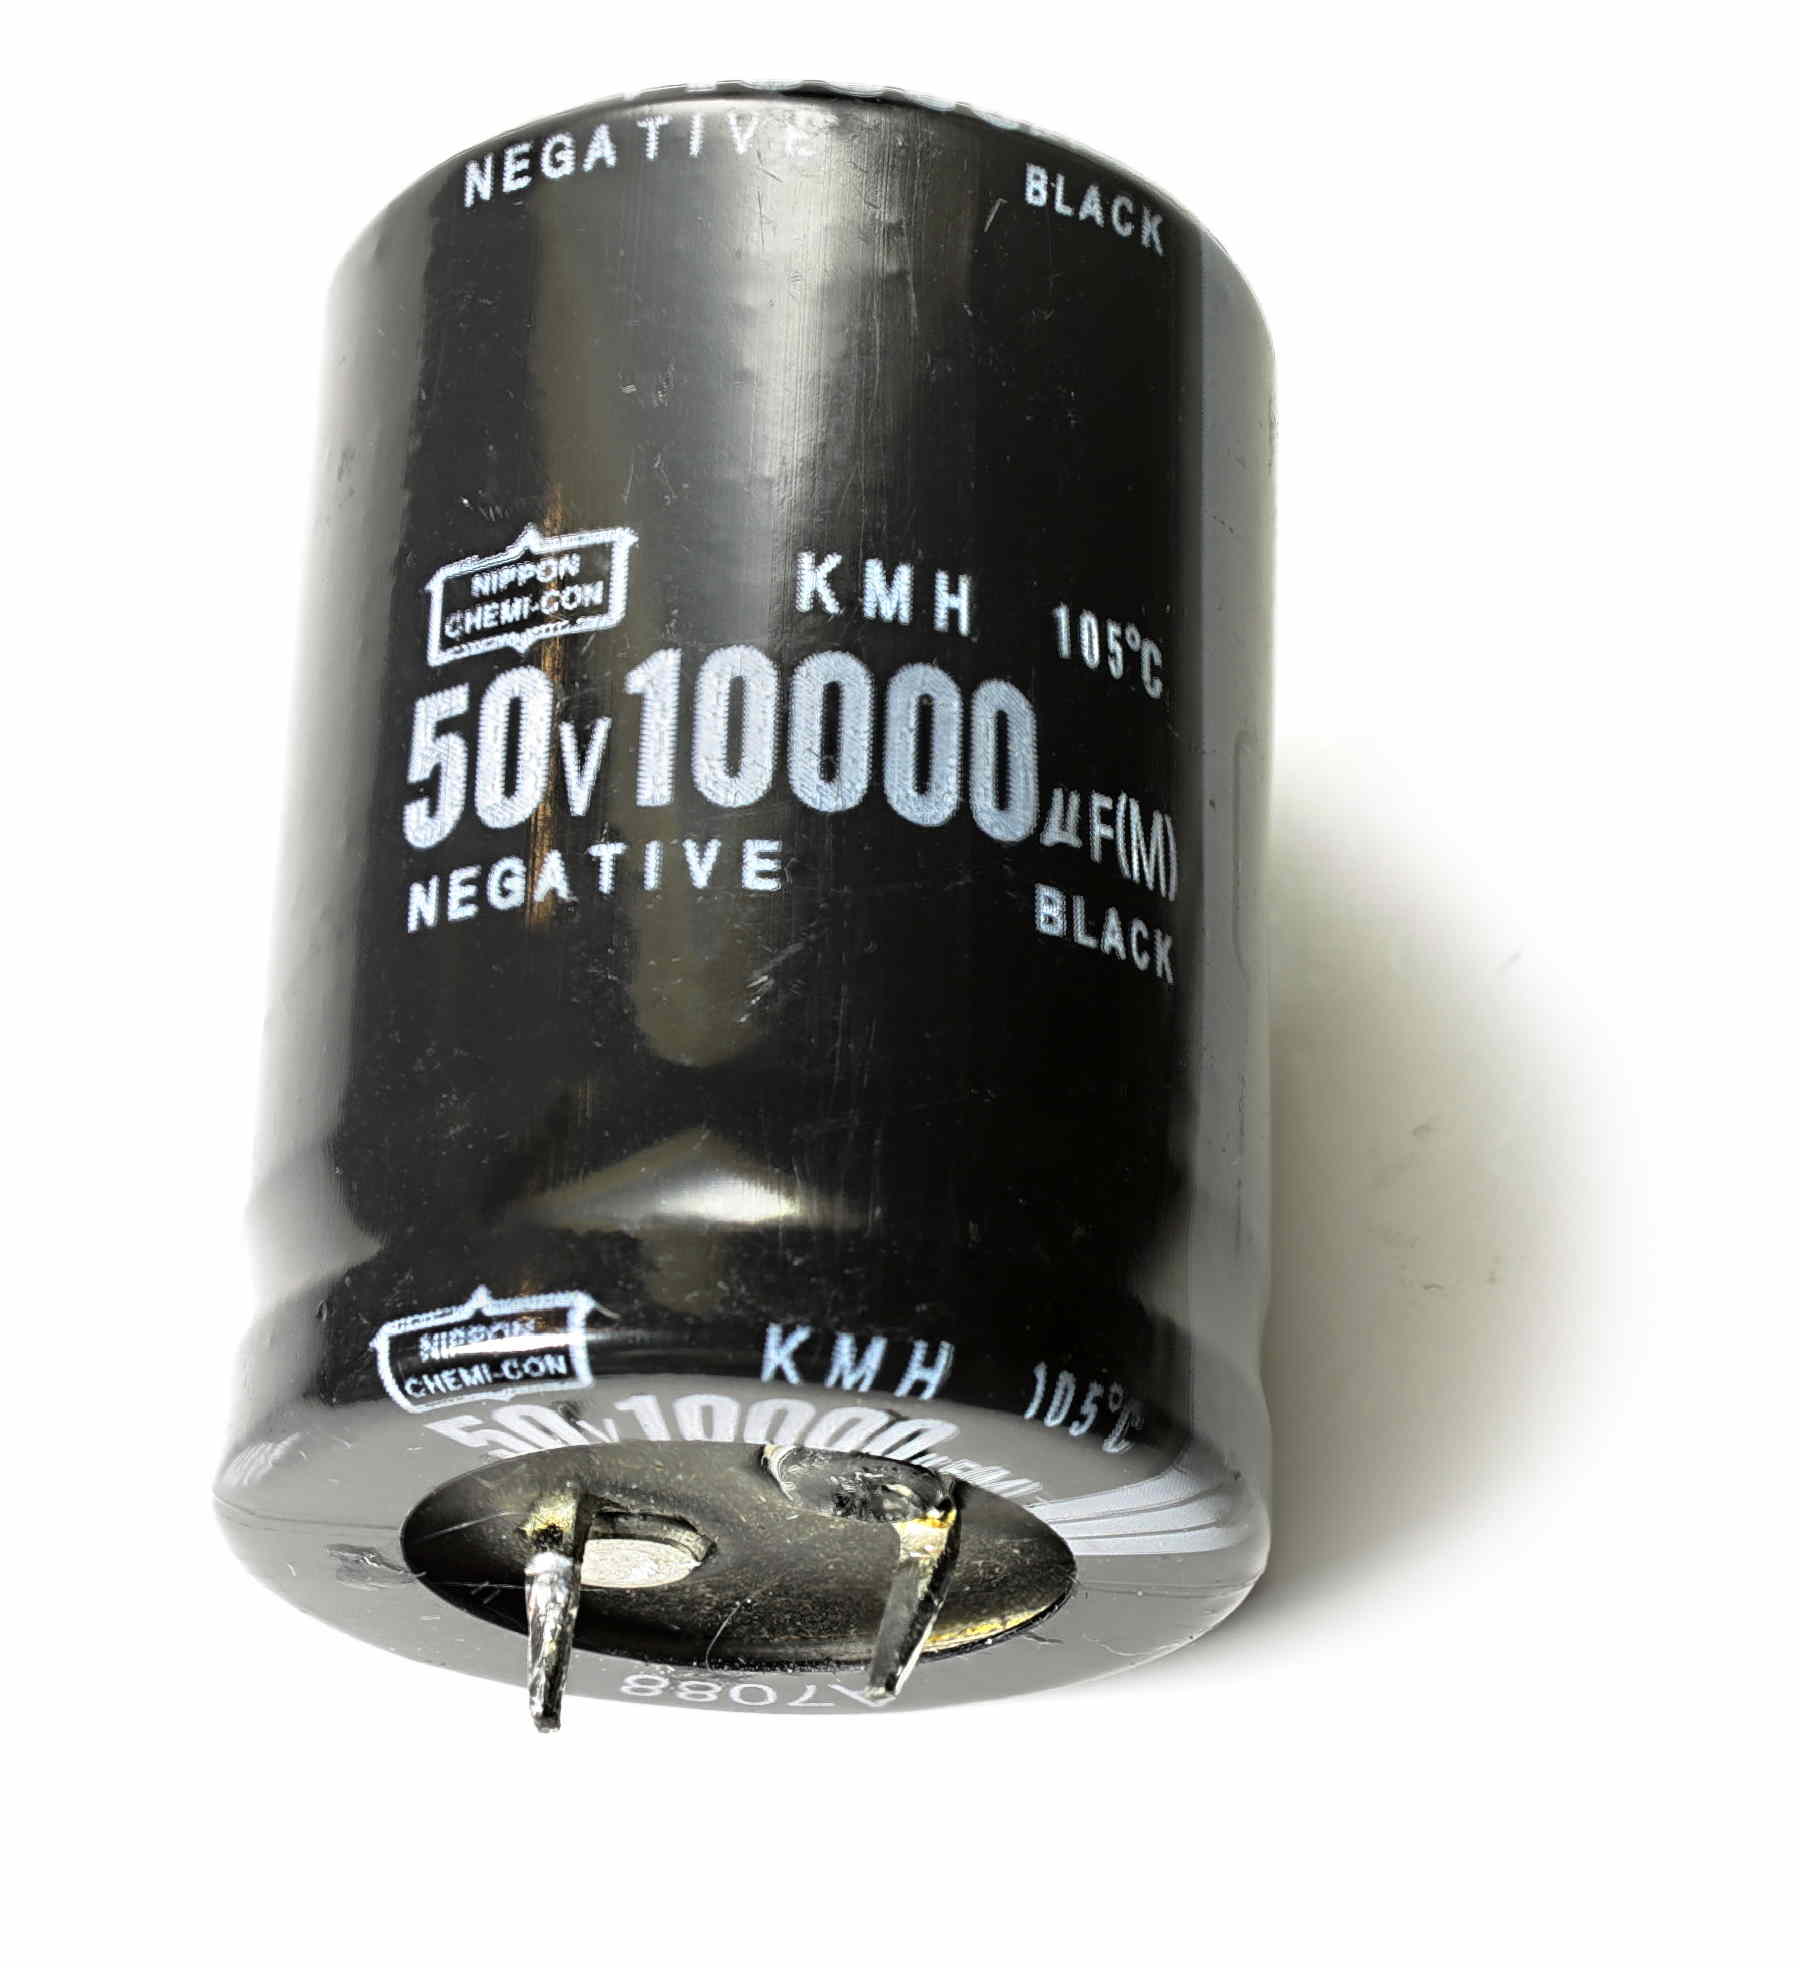 ELKO 10000µF / 50V - 30x40 mm Elektrolyt Kondensator radial